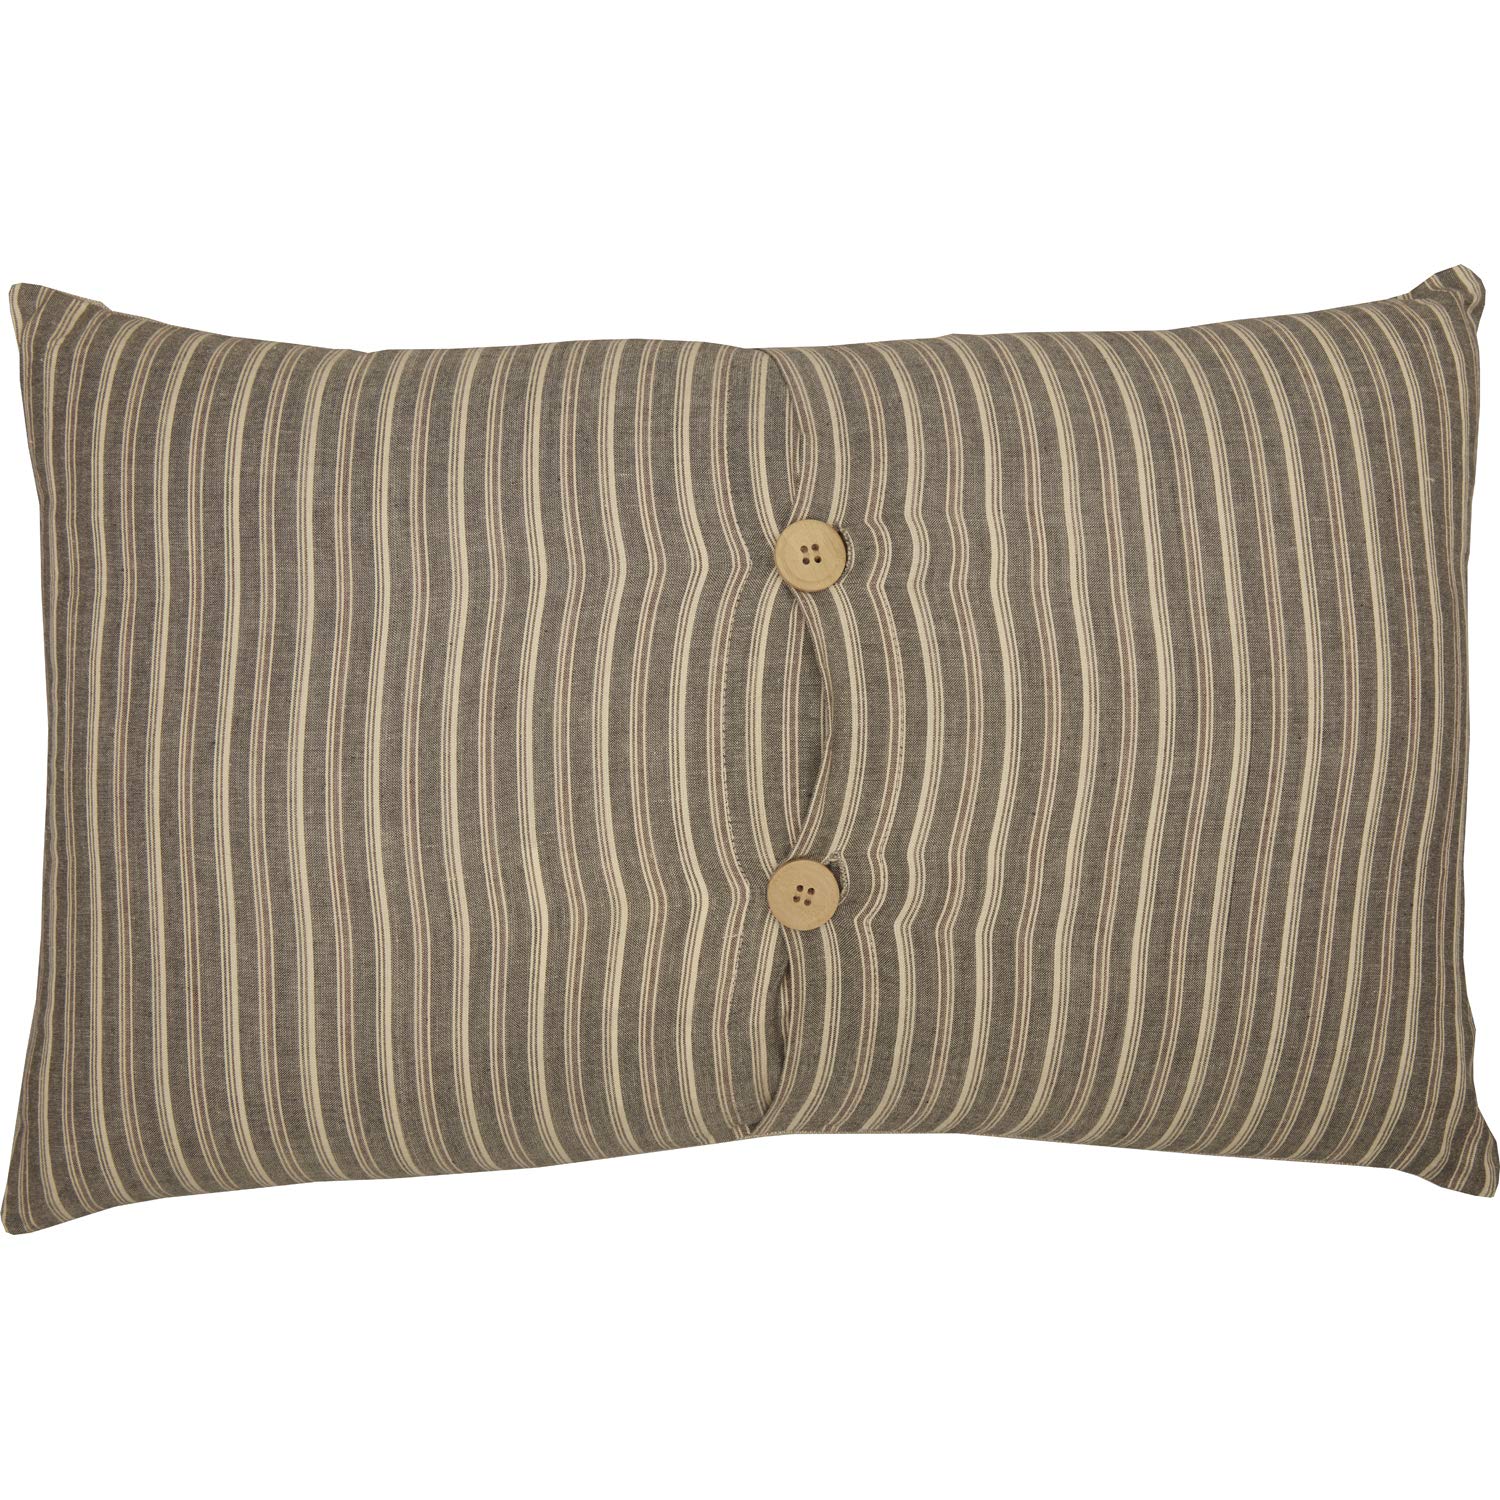 VHC Brands Sawyer Mill Charcoal Pillow, 14x22, Plow